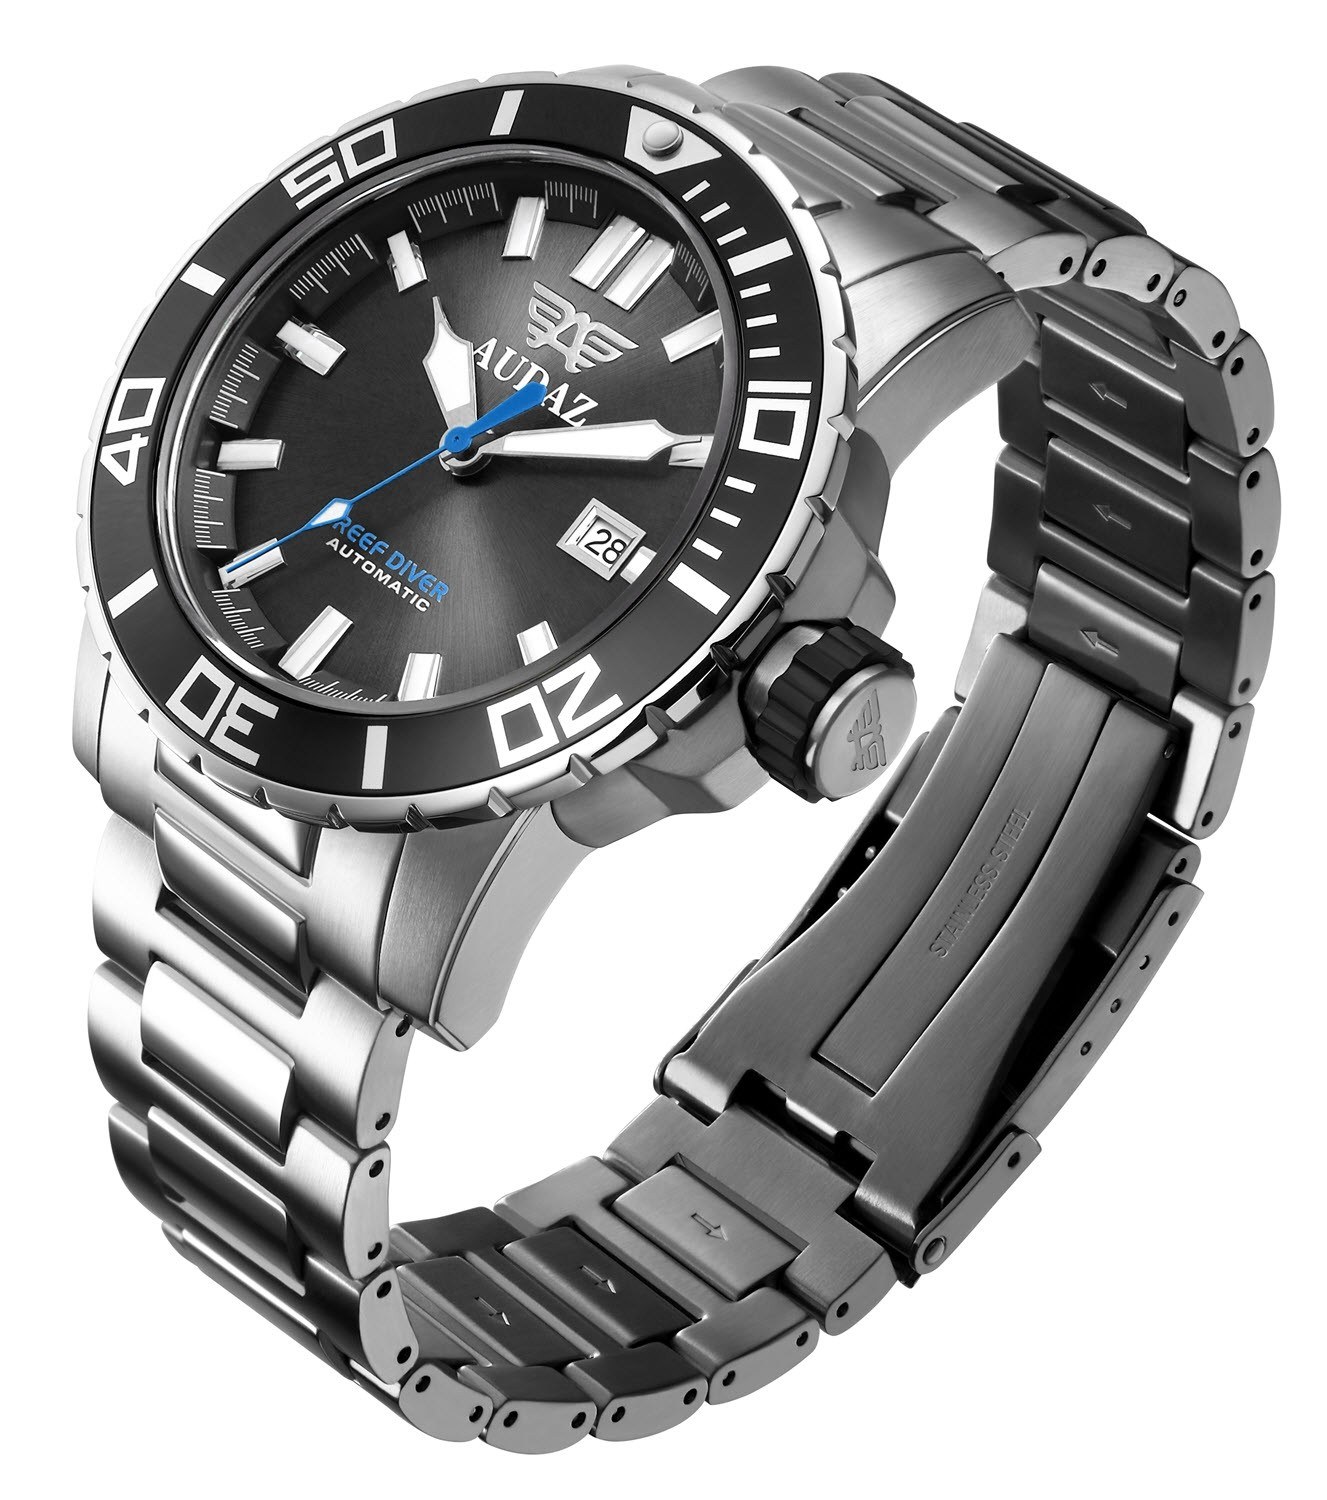 Audaz Reef Diver Gray Sunray Men's Diver Automatic Watch 45mm ADZ-2040-03